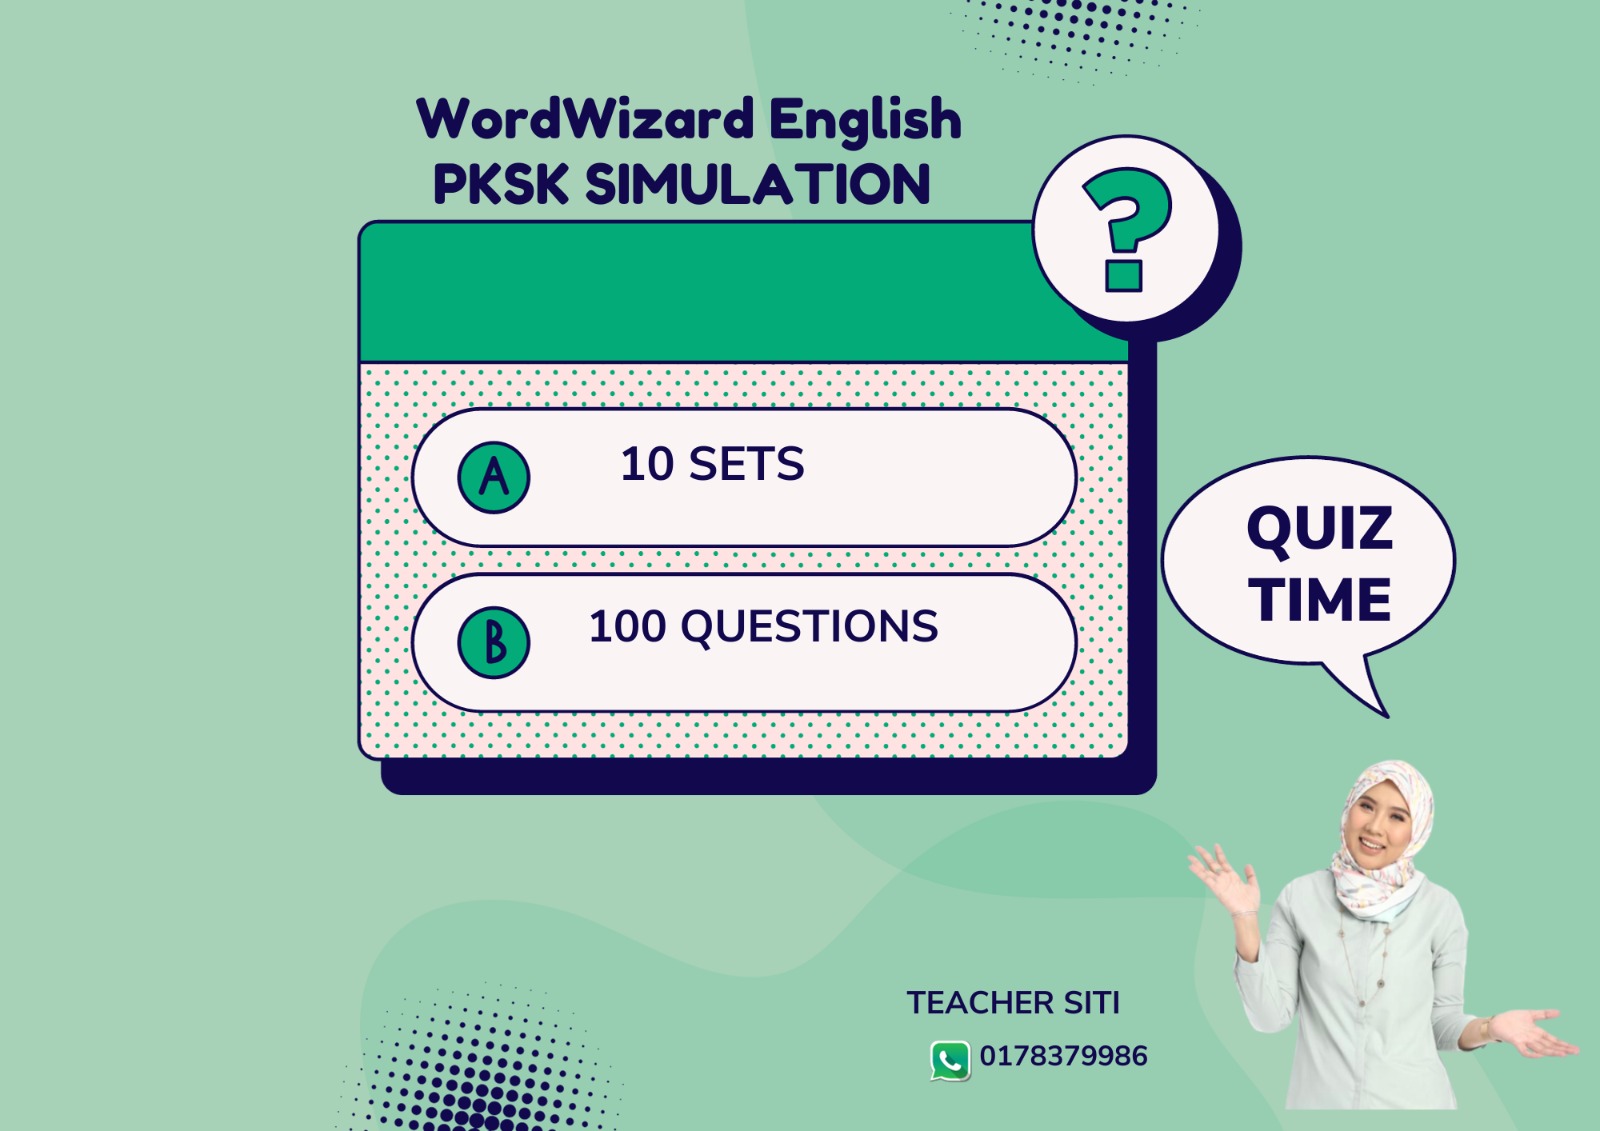 WordWizard English PKSK Simulation